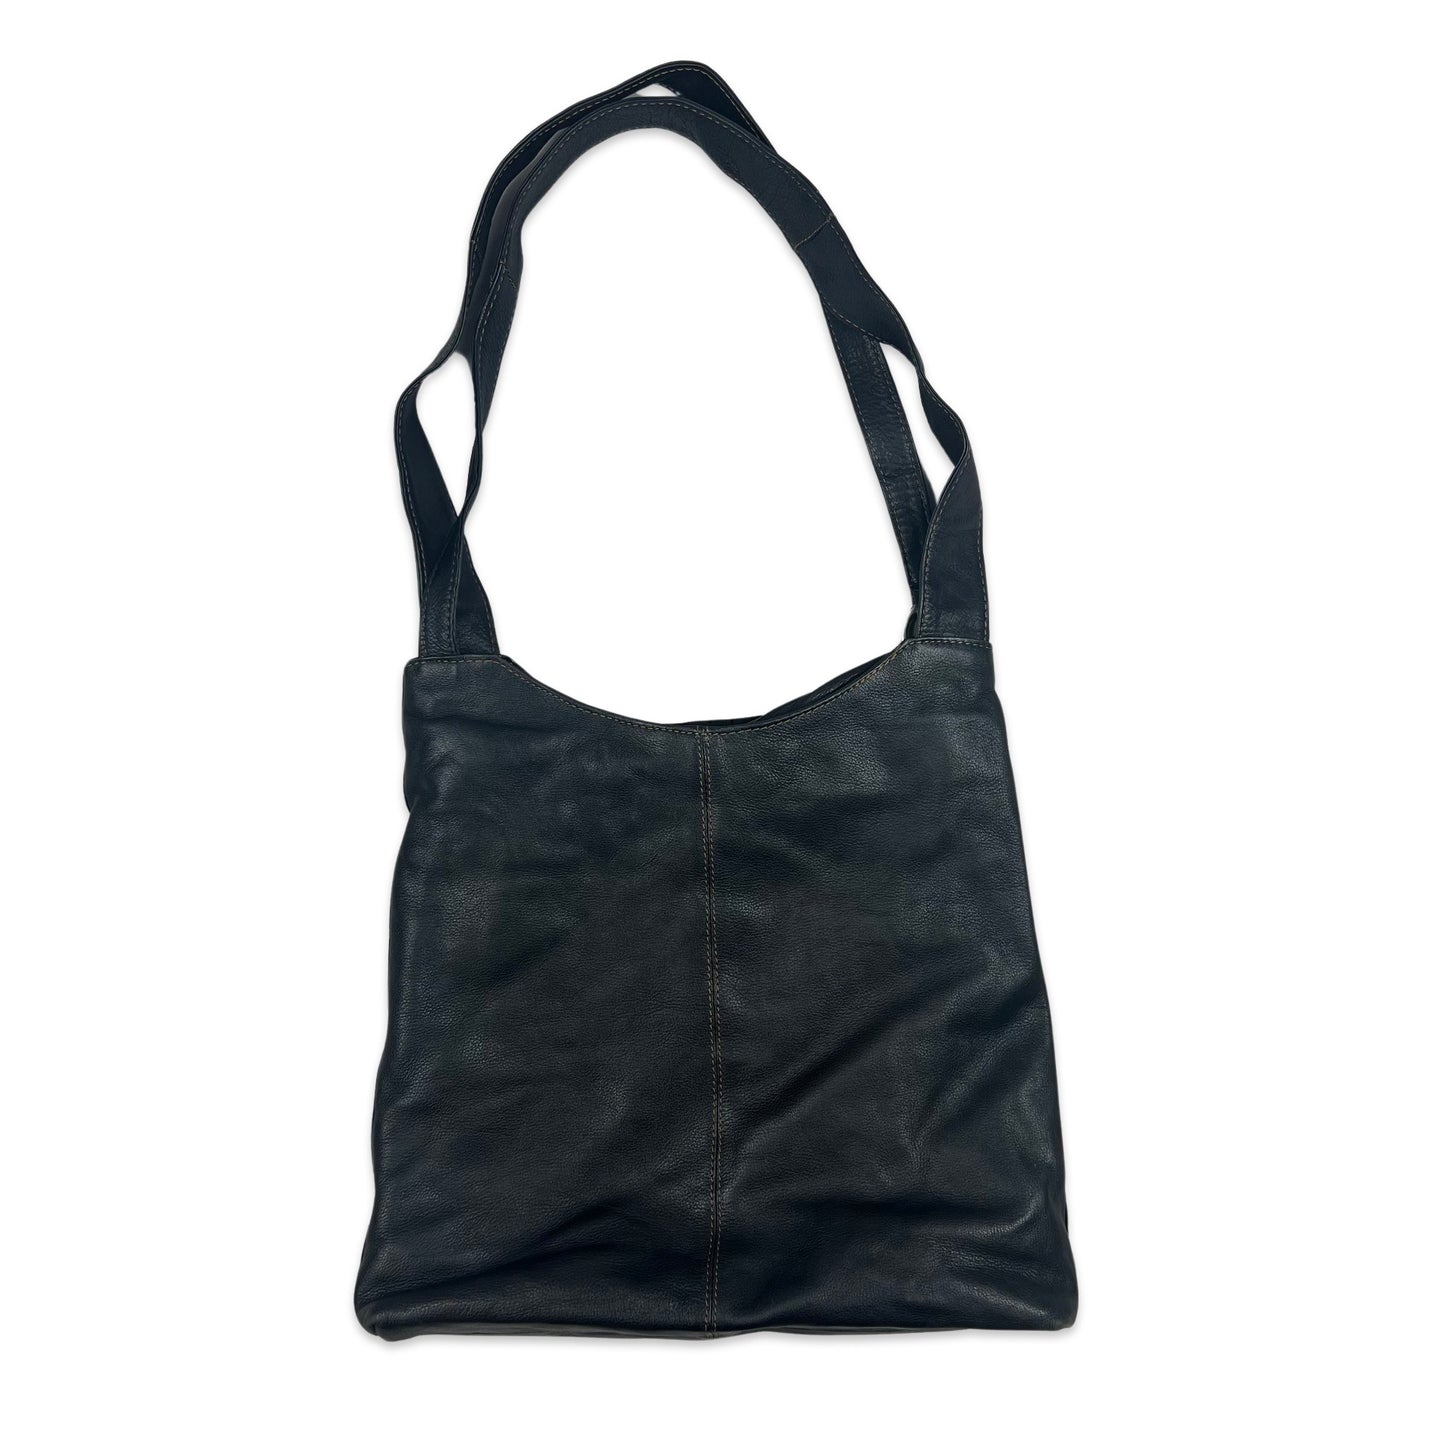 Vintage 90s Y2K Black Leather Tote Handbag